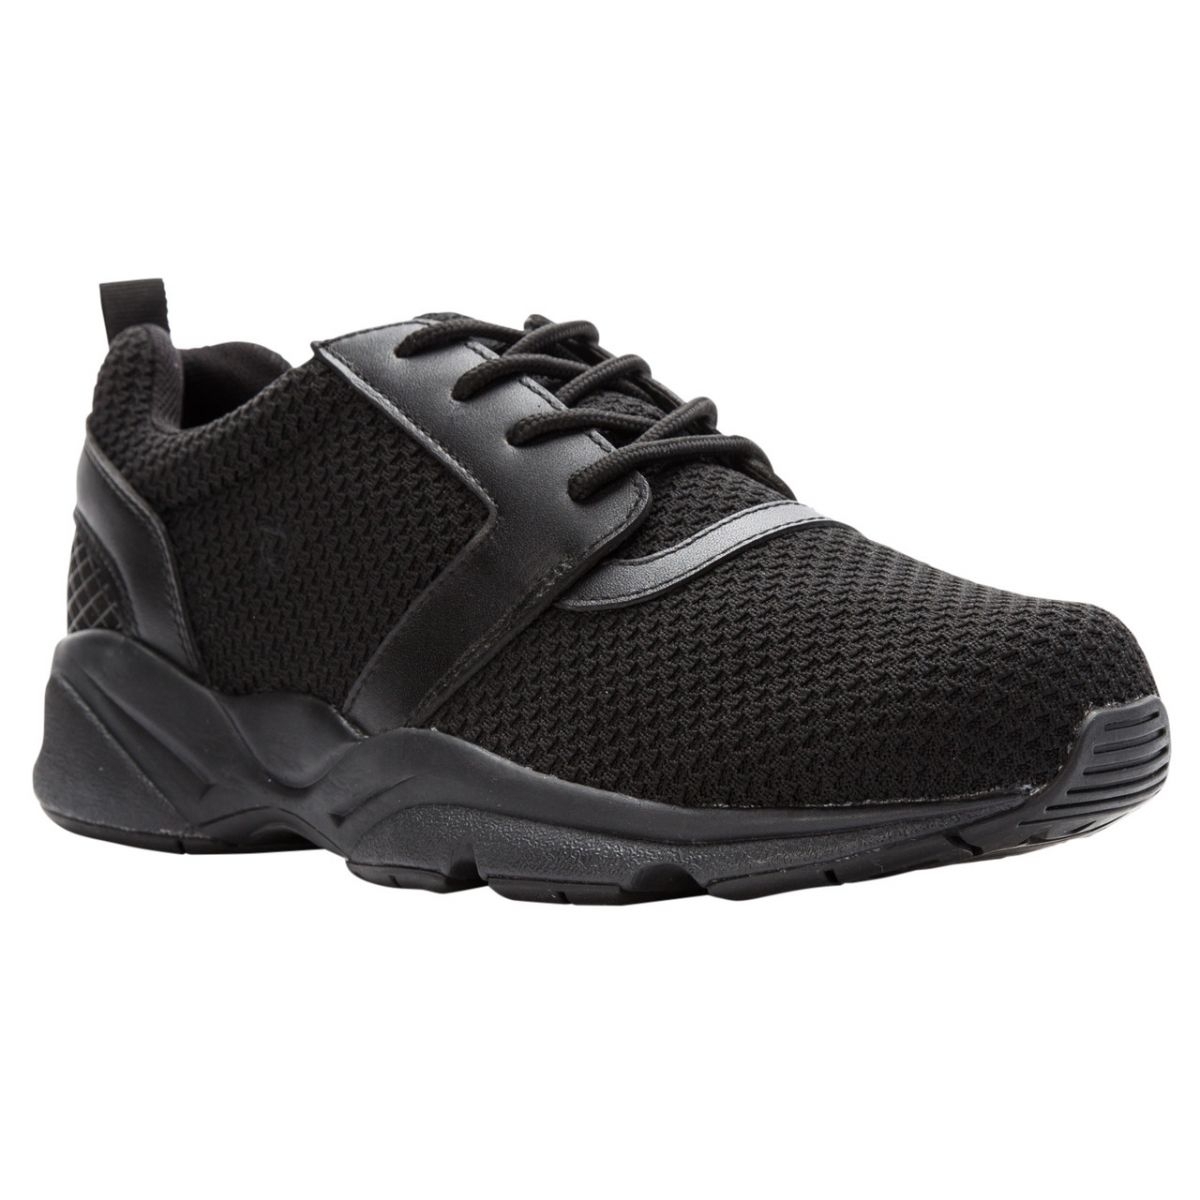 Propet Men's Stability X Walking Shoe Black - MAA012MBLK BLACK - BLACK, 10.5 N US